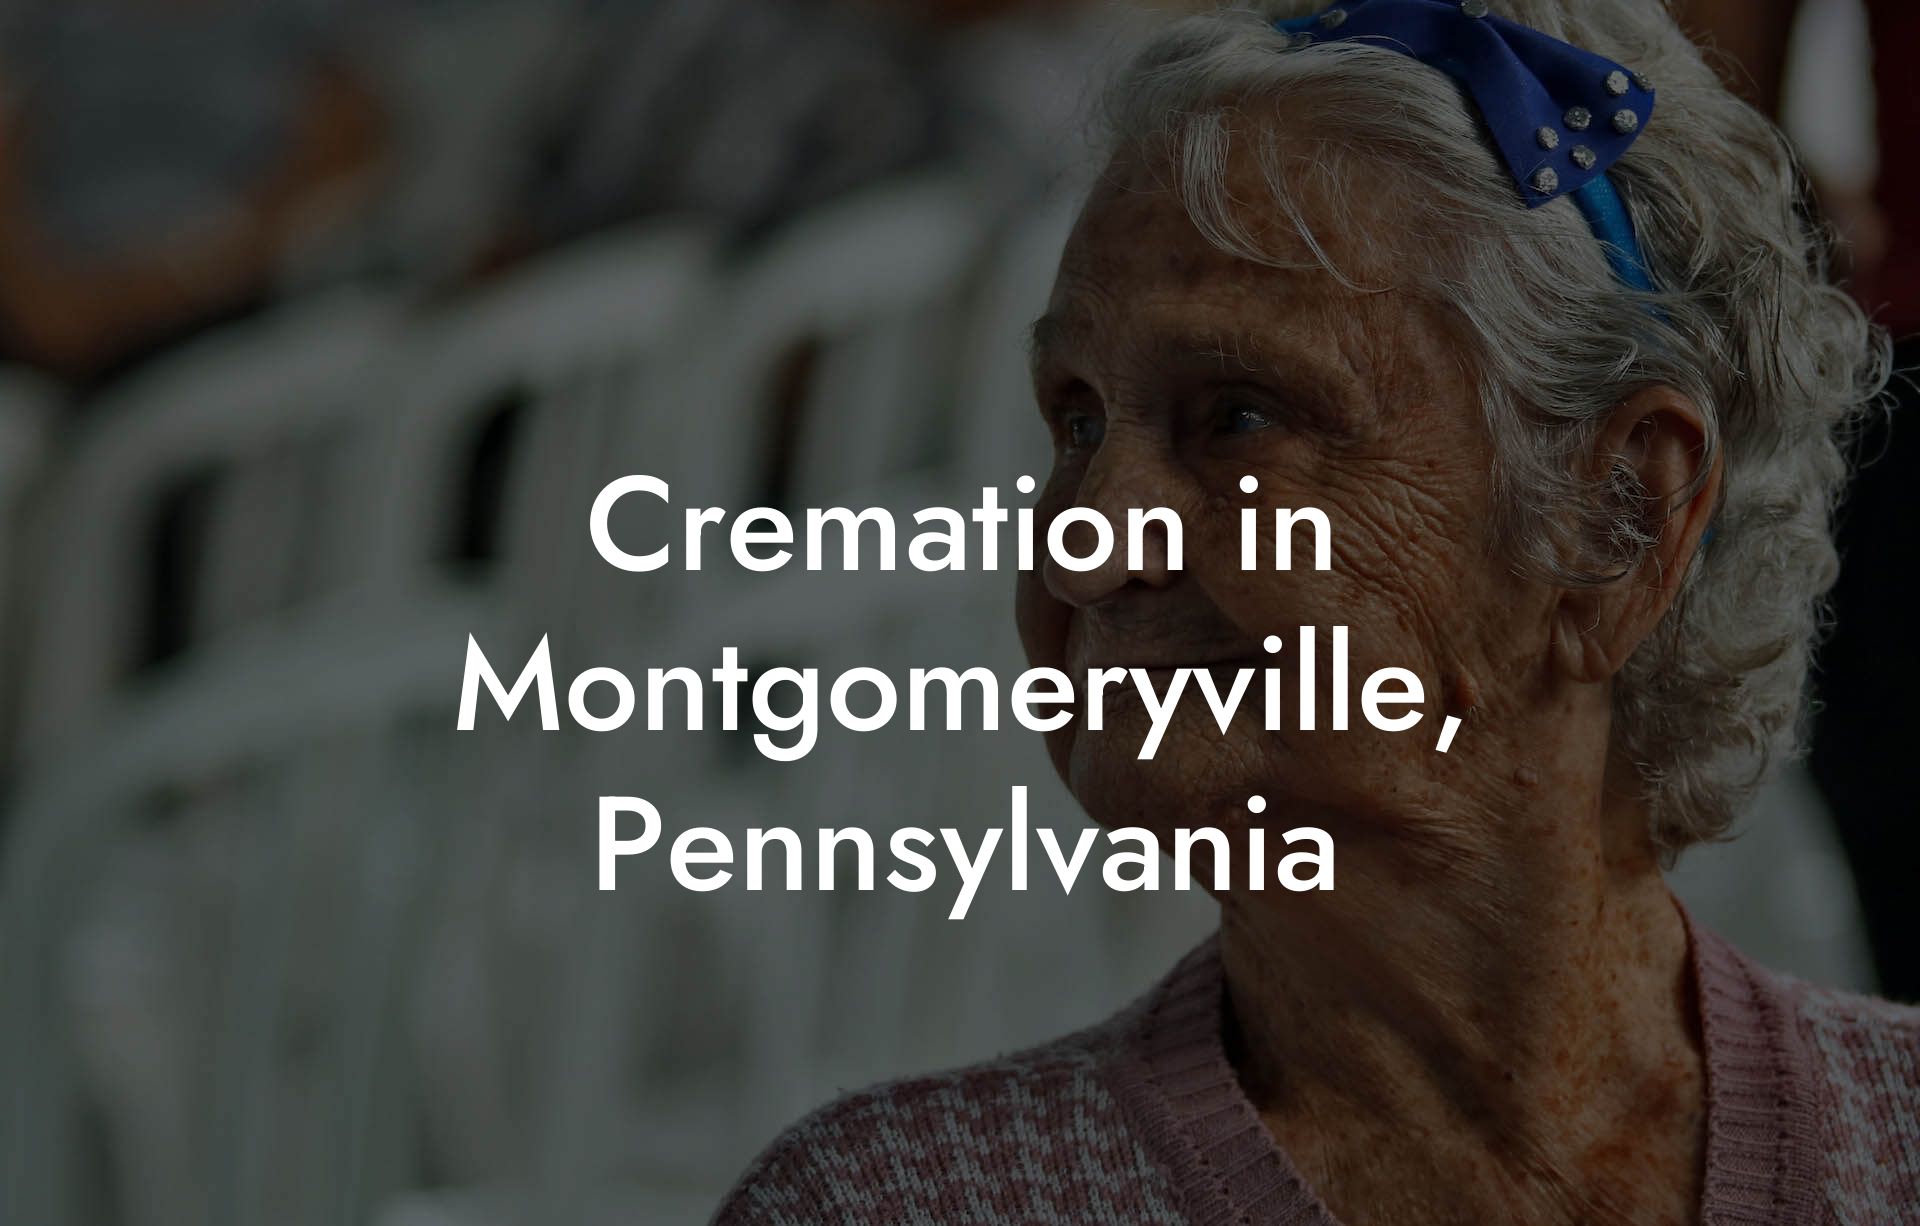 Cremation in Montgomeryville, Pennsylvania